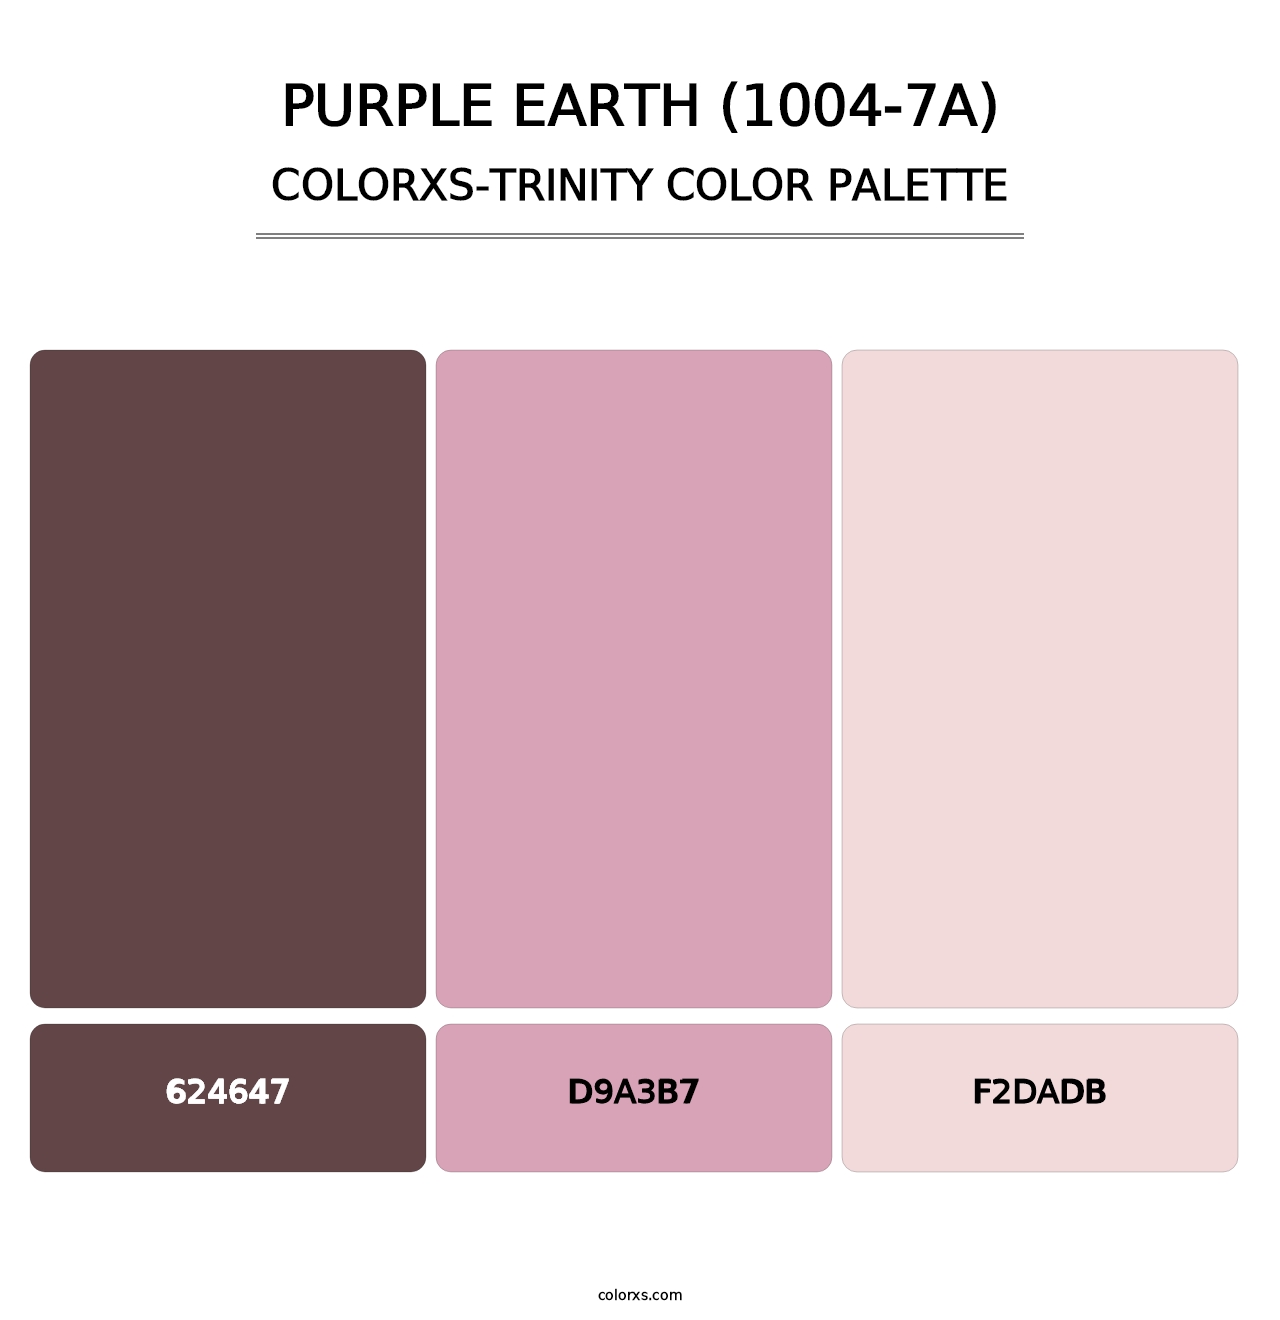 Purple Earth (1004-7A) - Colorxs Trinity Palette